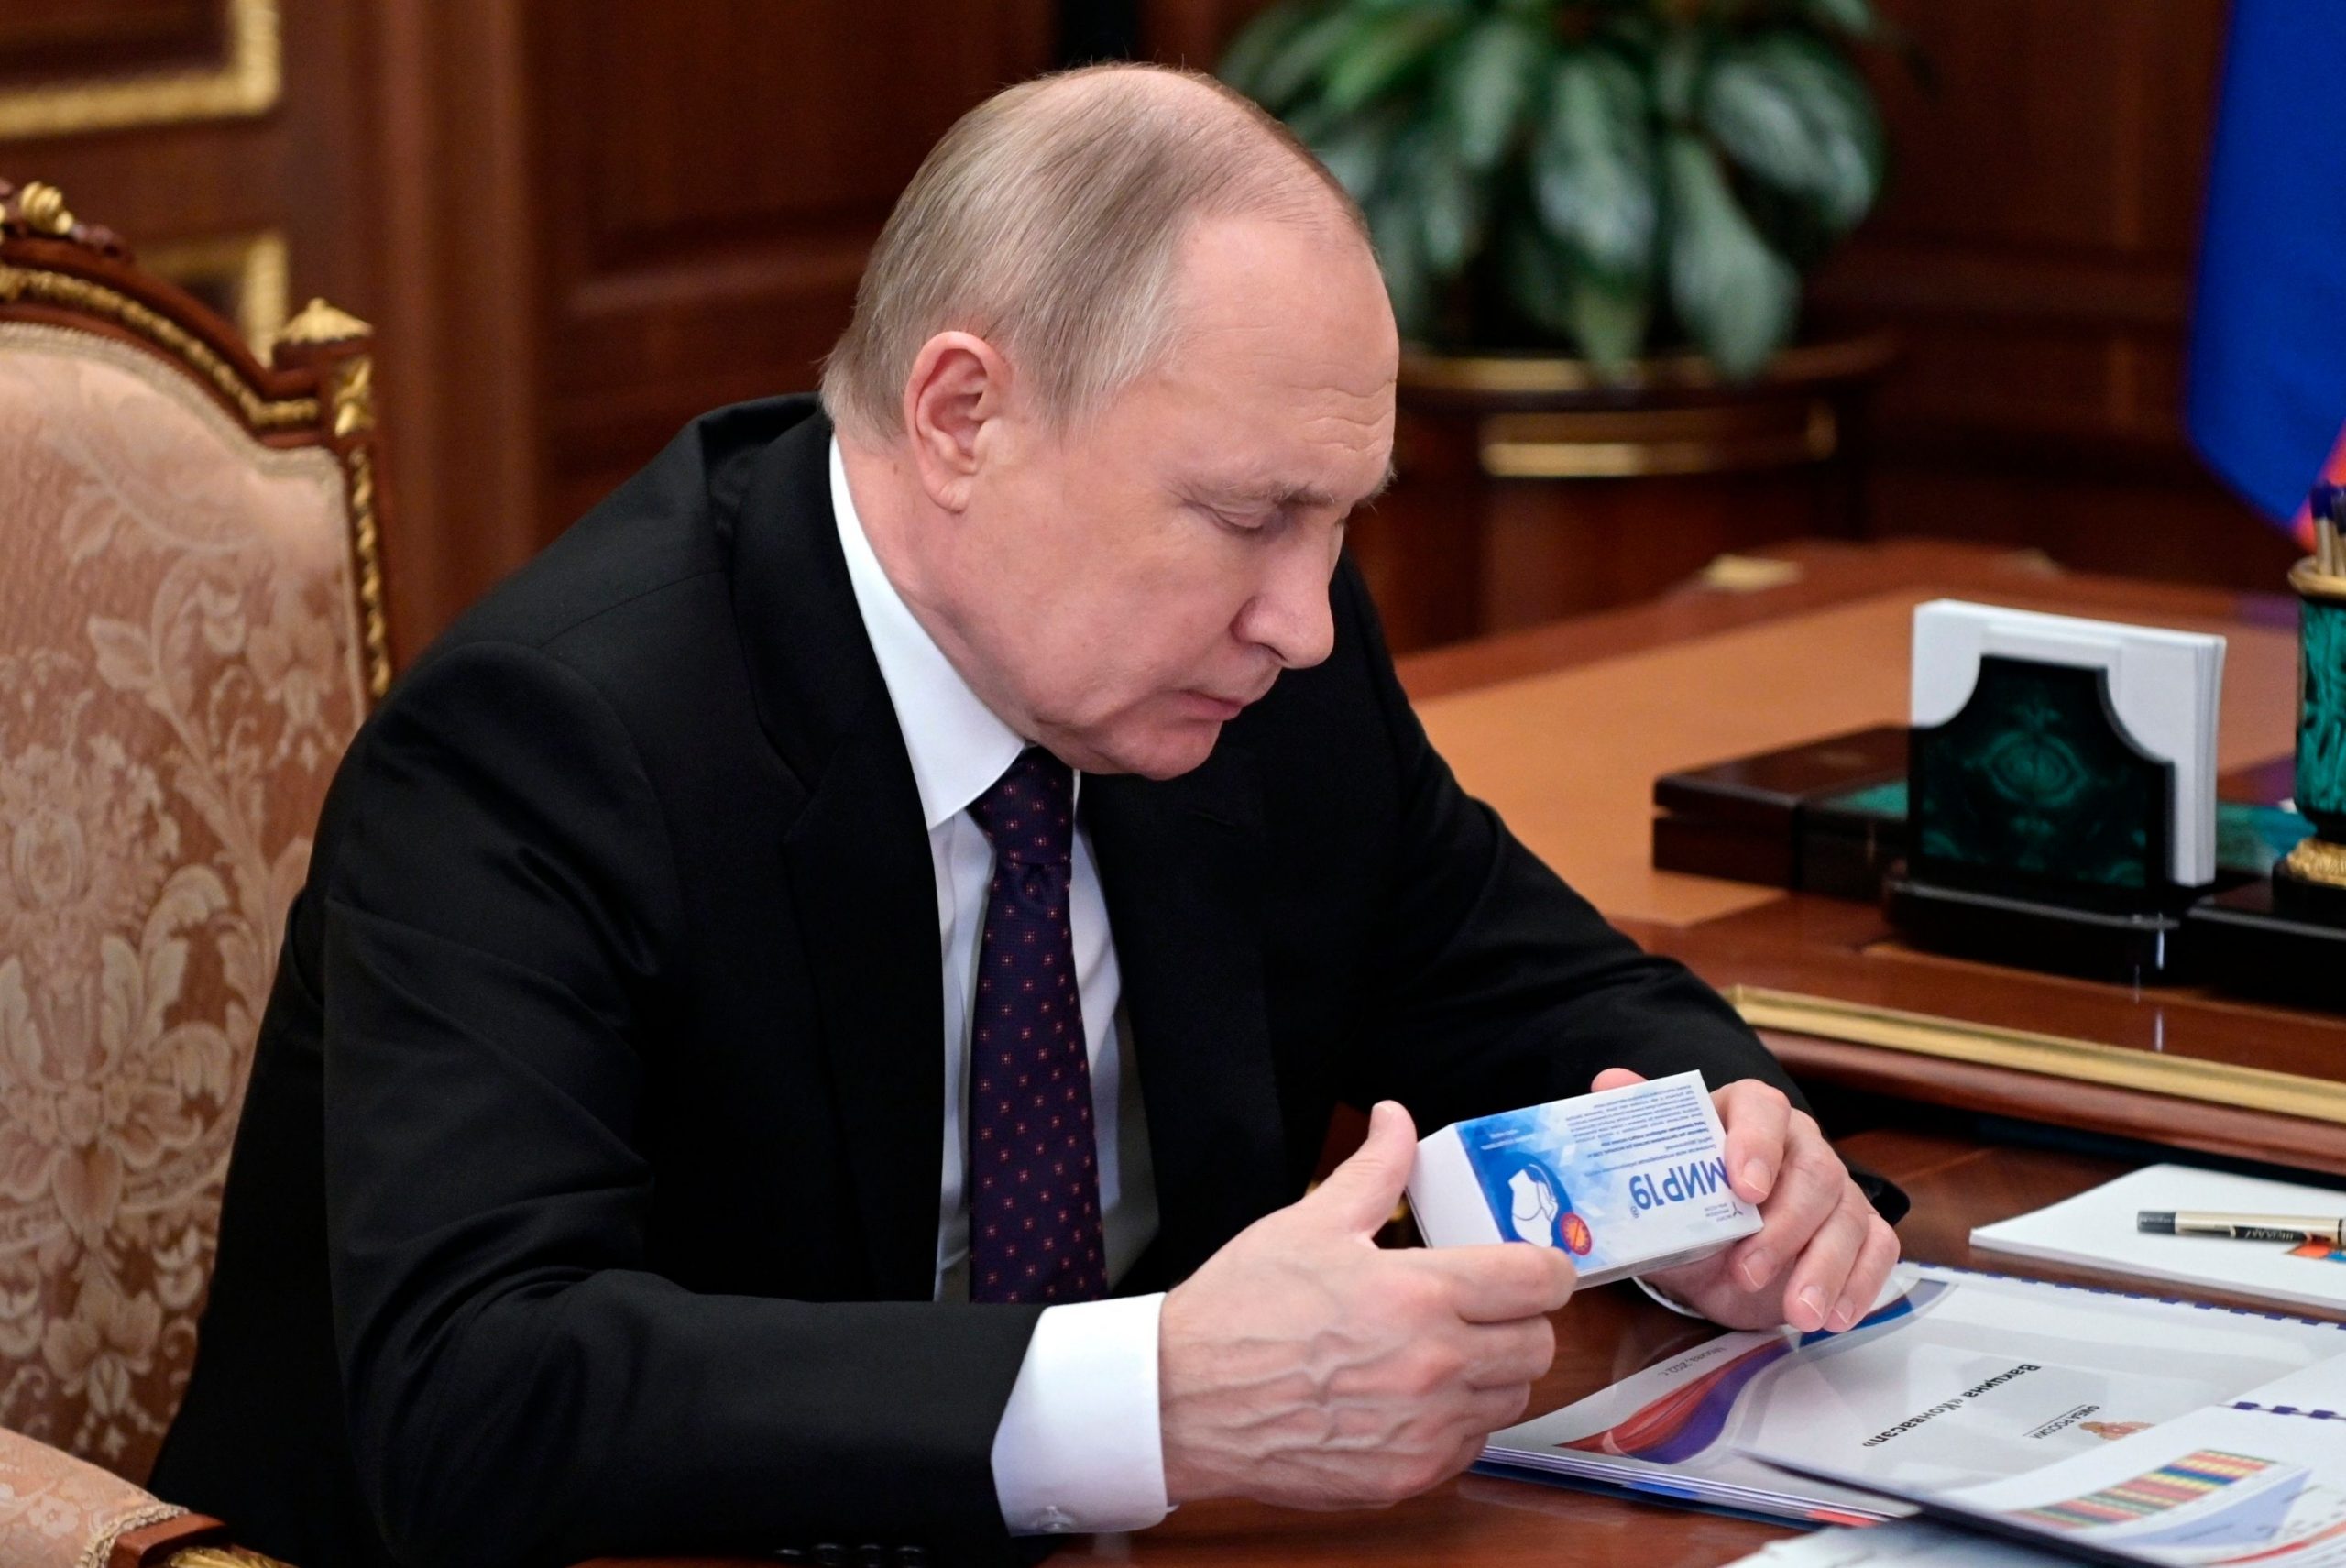 Poisoning threat makes Vladimir Putin fire 1,000 staff members: Report